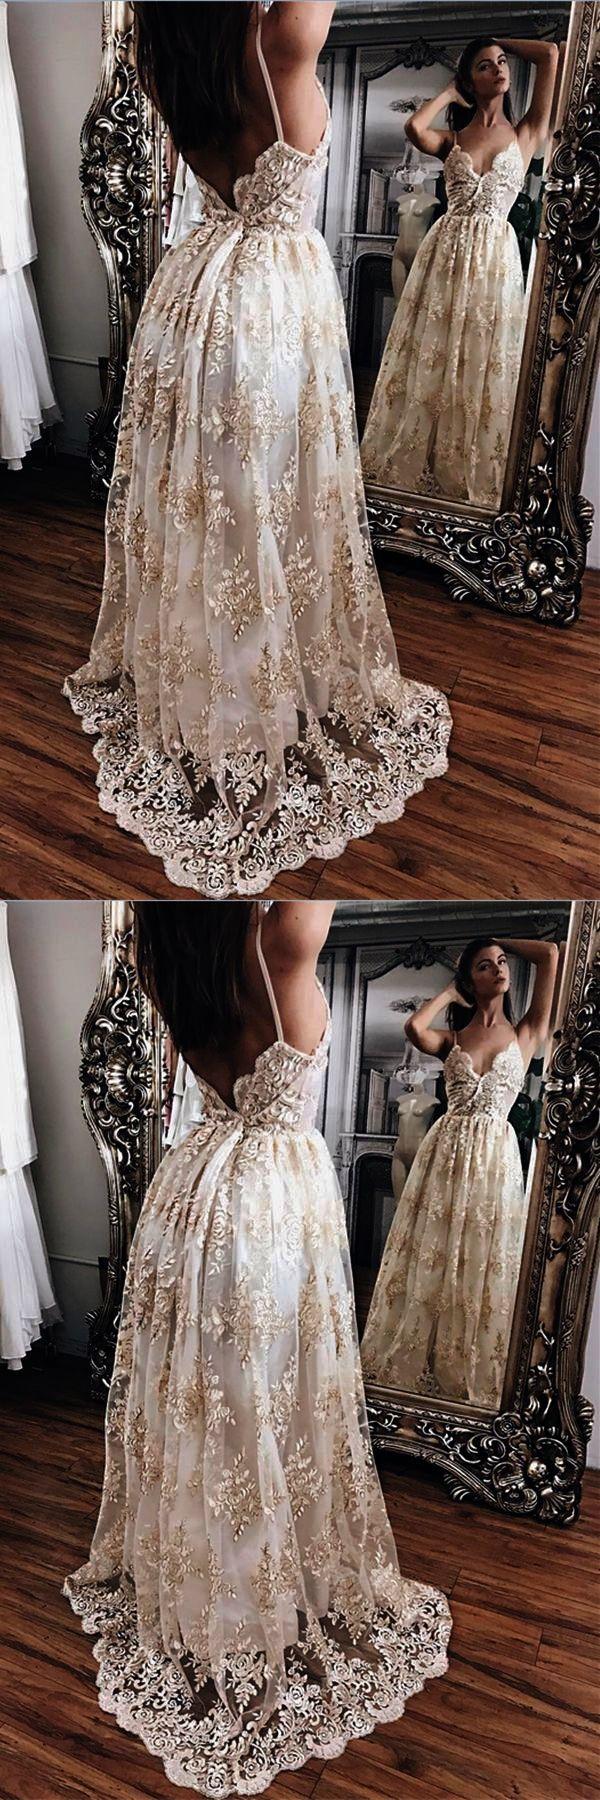 زفاف - Trendy - Most Beautiful Lace Wedding Dresses :-) 